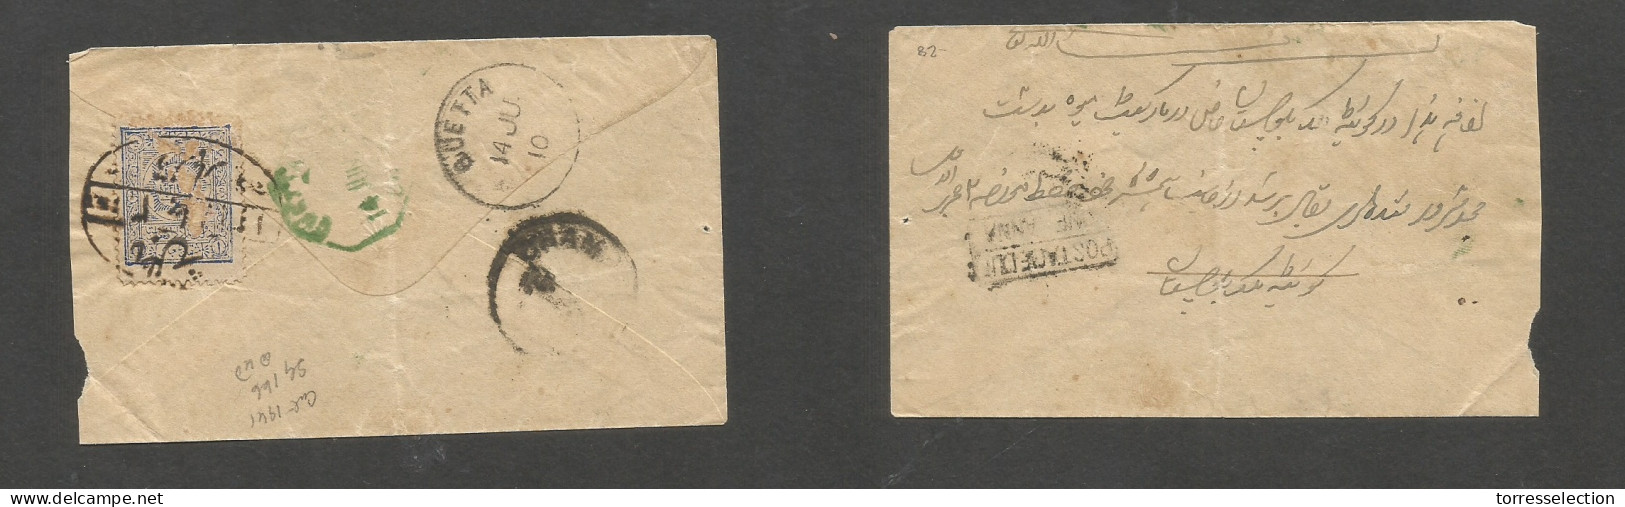 AFGHANISTAN. 1910 (June) Reverse Fkd Fkd Envelope To Pakistan, Quetta (14 June) Fine. SALE. - Afghanistan